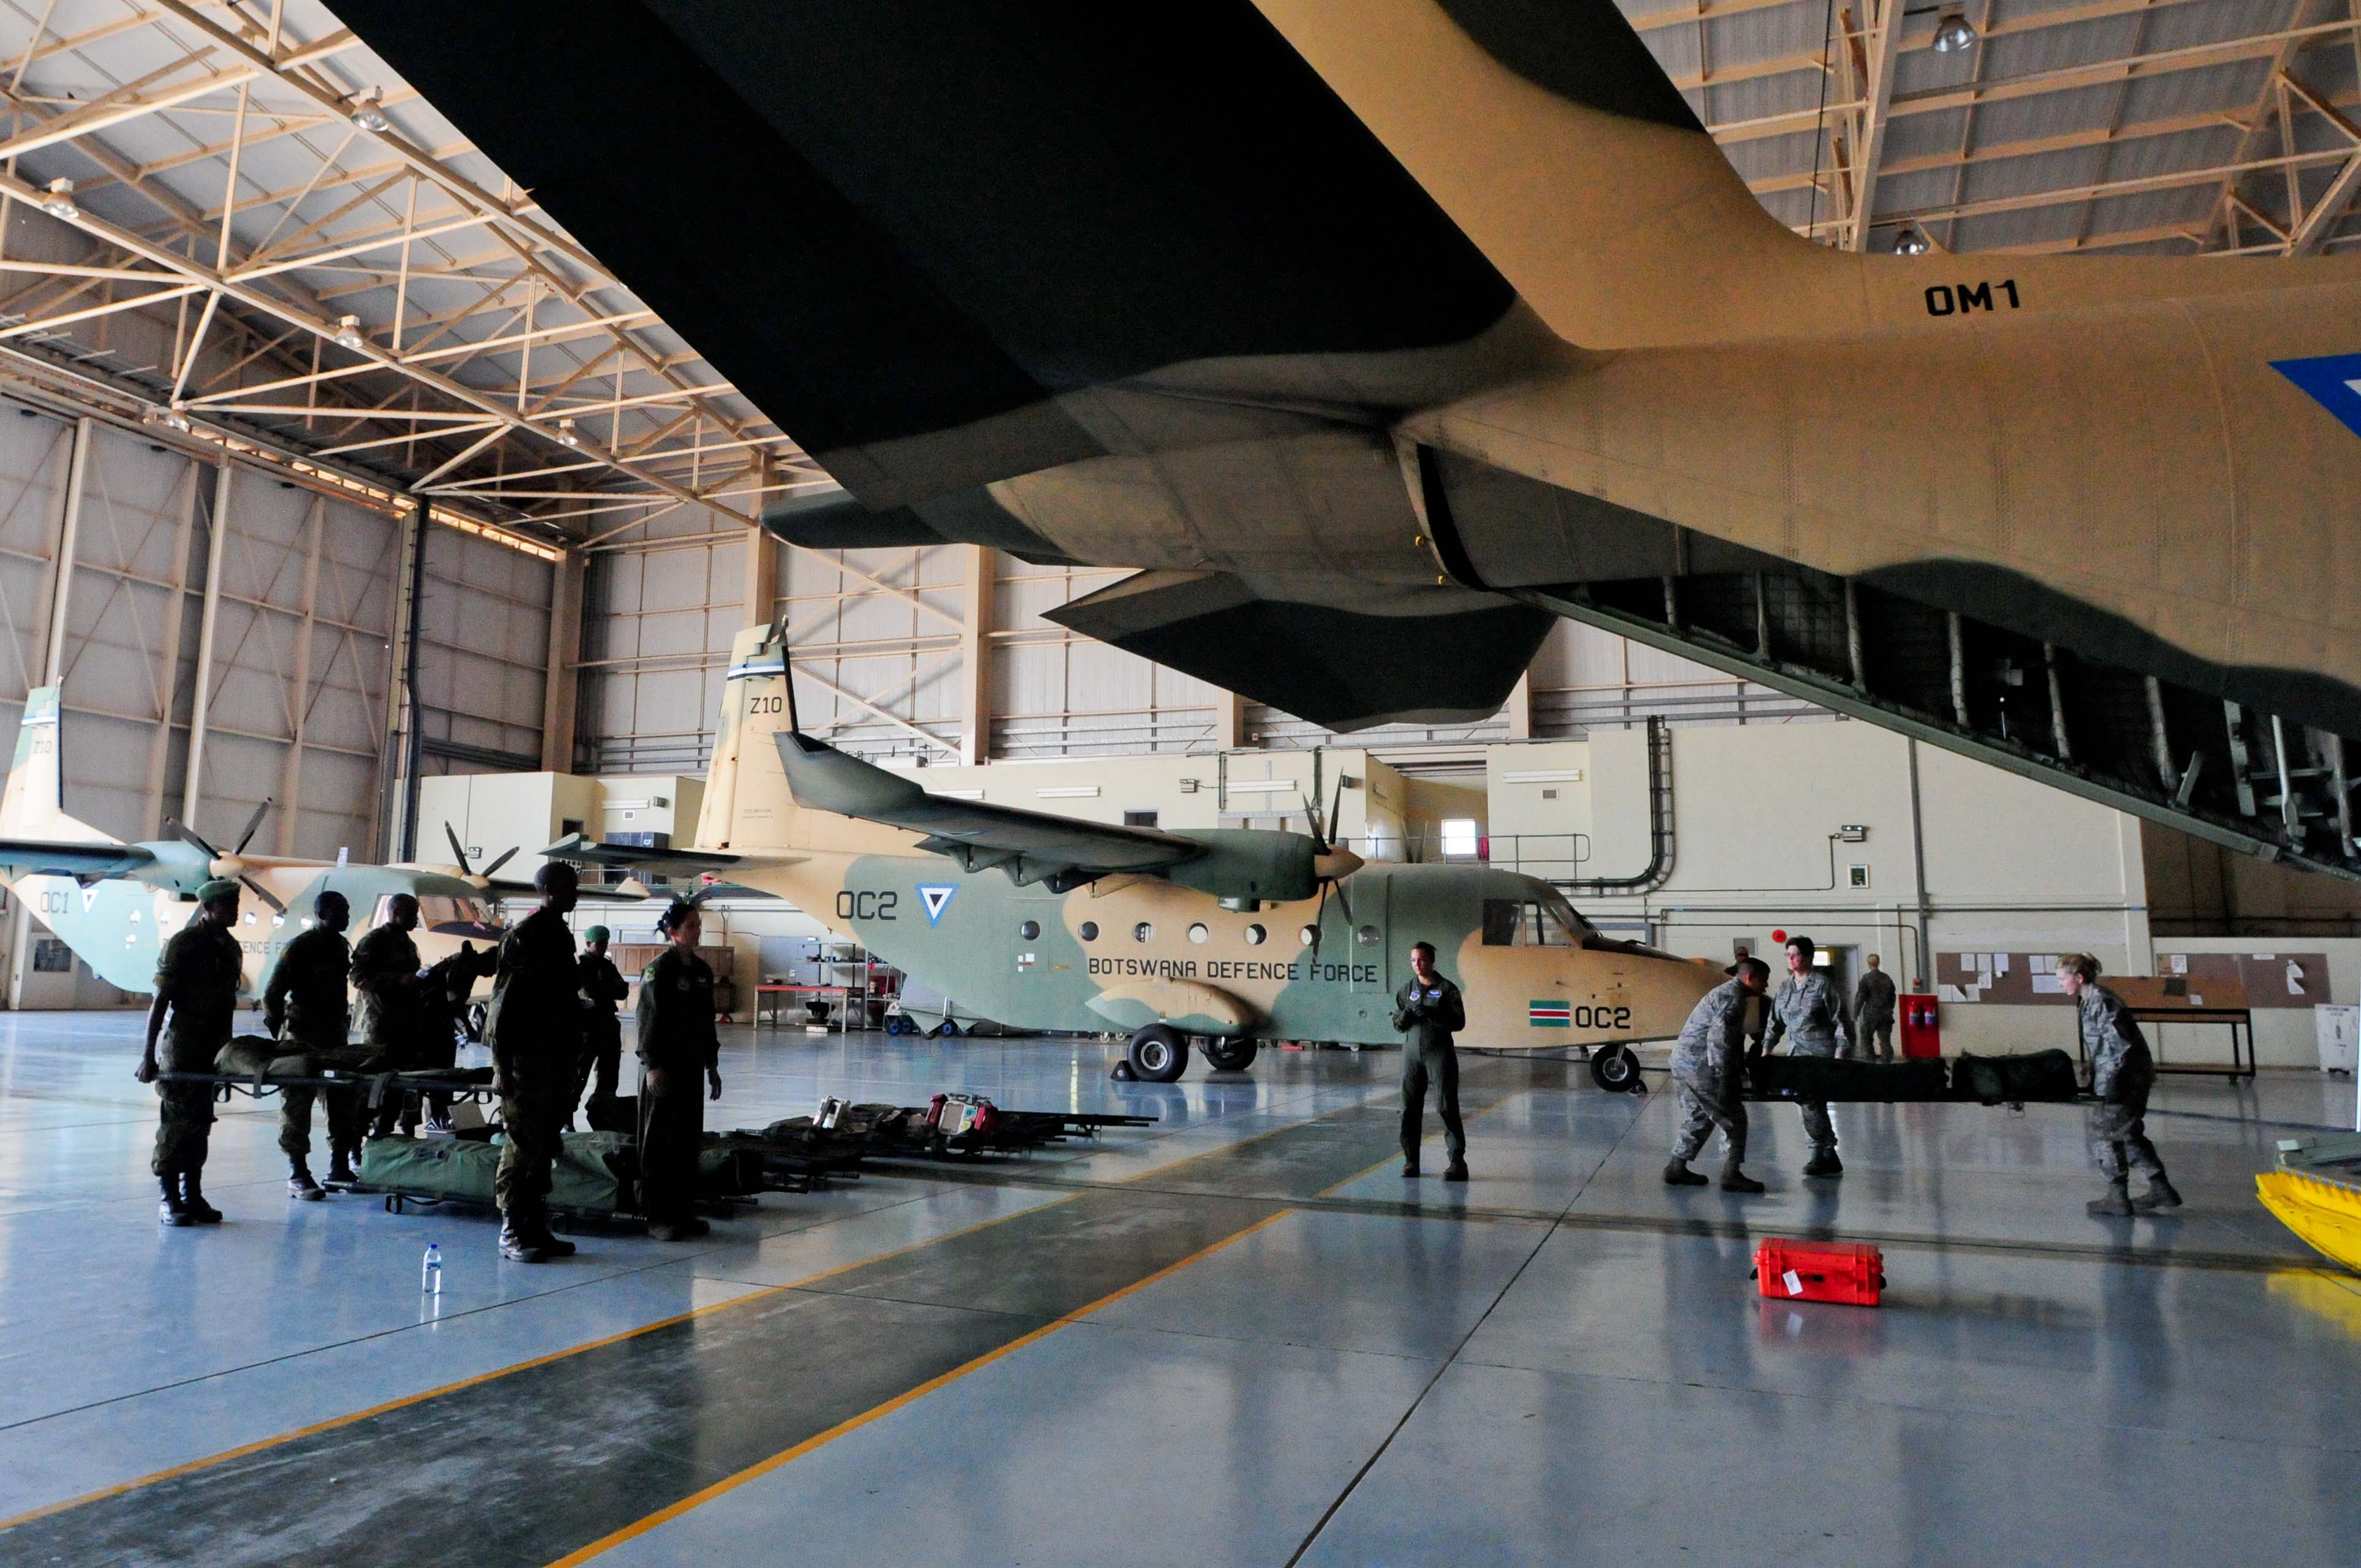 North Carolina Ang Botswana Defense Force Find Common Ground On C 130 Hercules U S Air